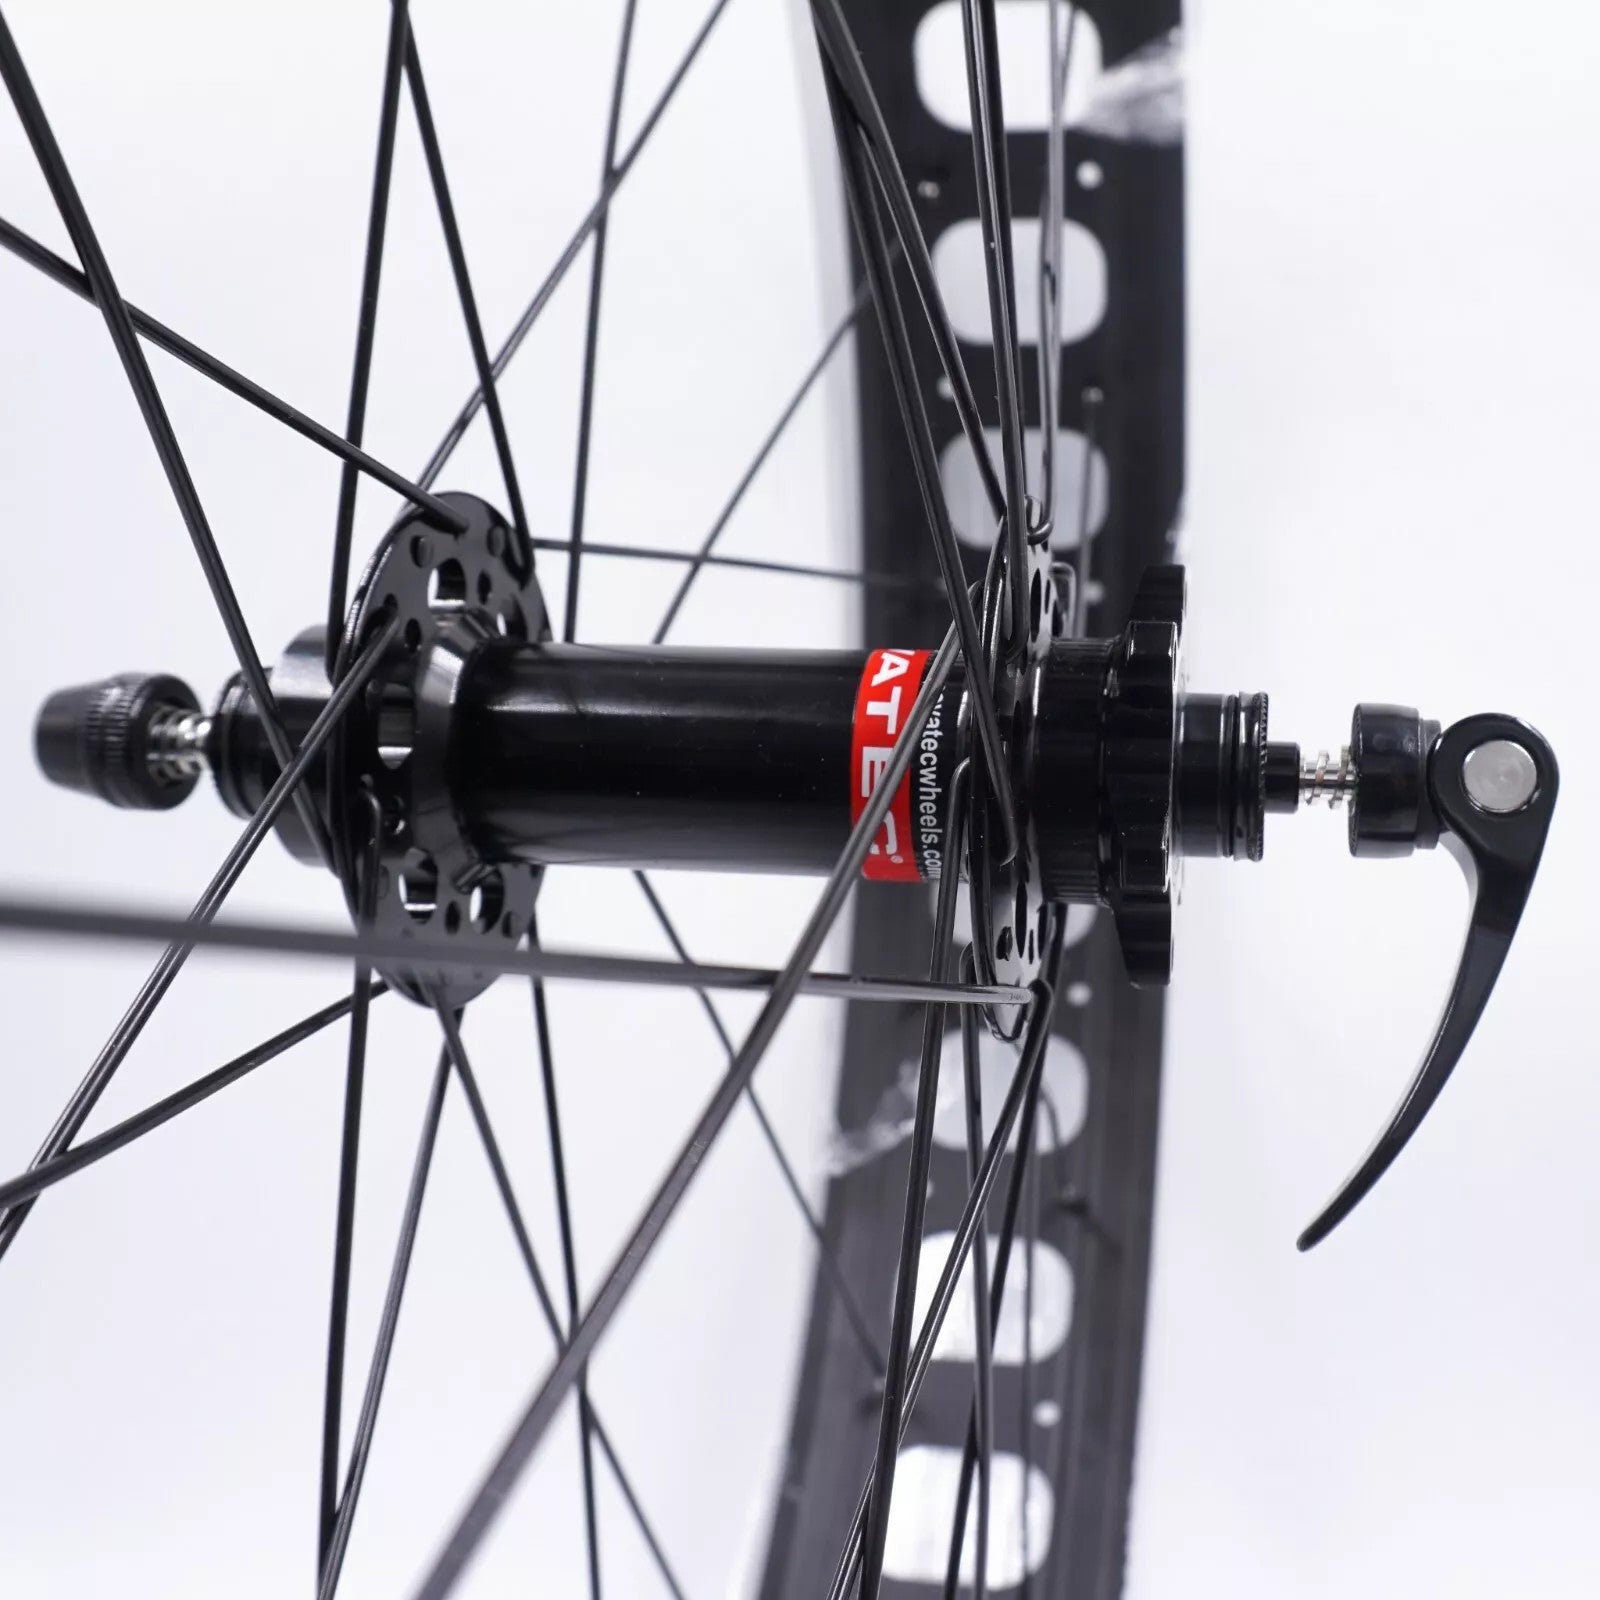 Alex Blizzerk 80 FRONT QR 135mm Fat Bike Wheel - Novatec D101SB